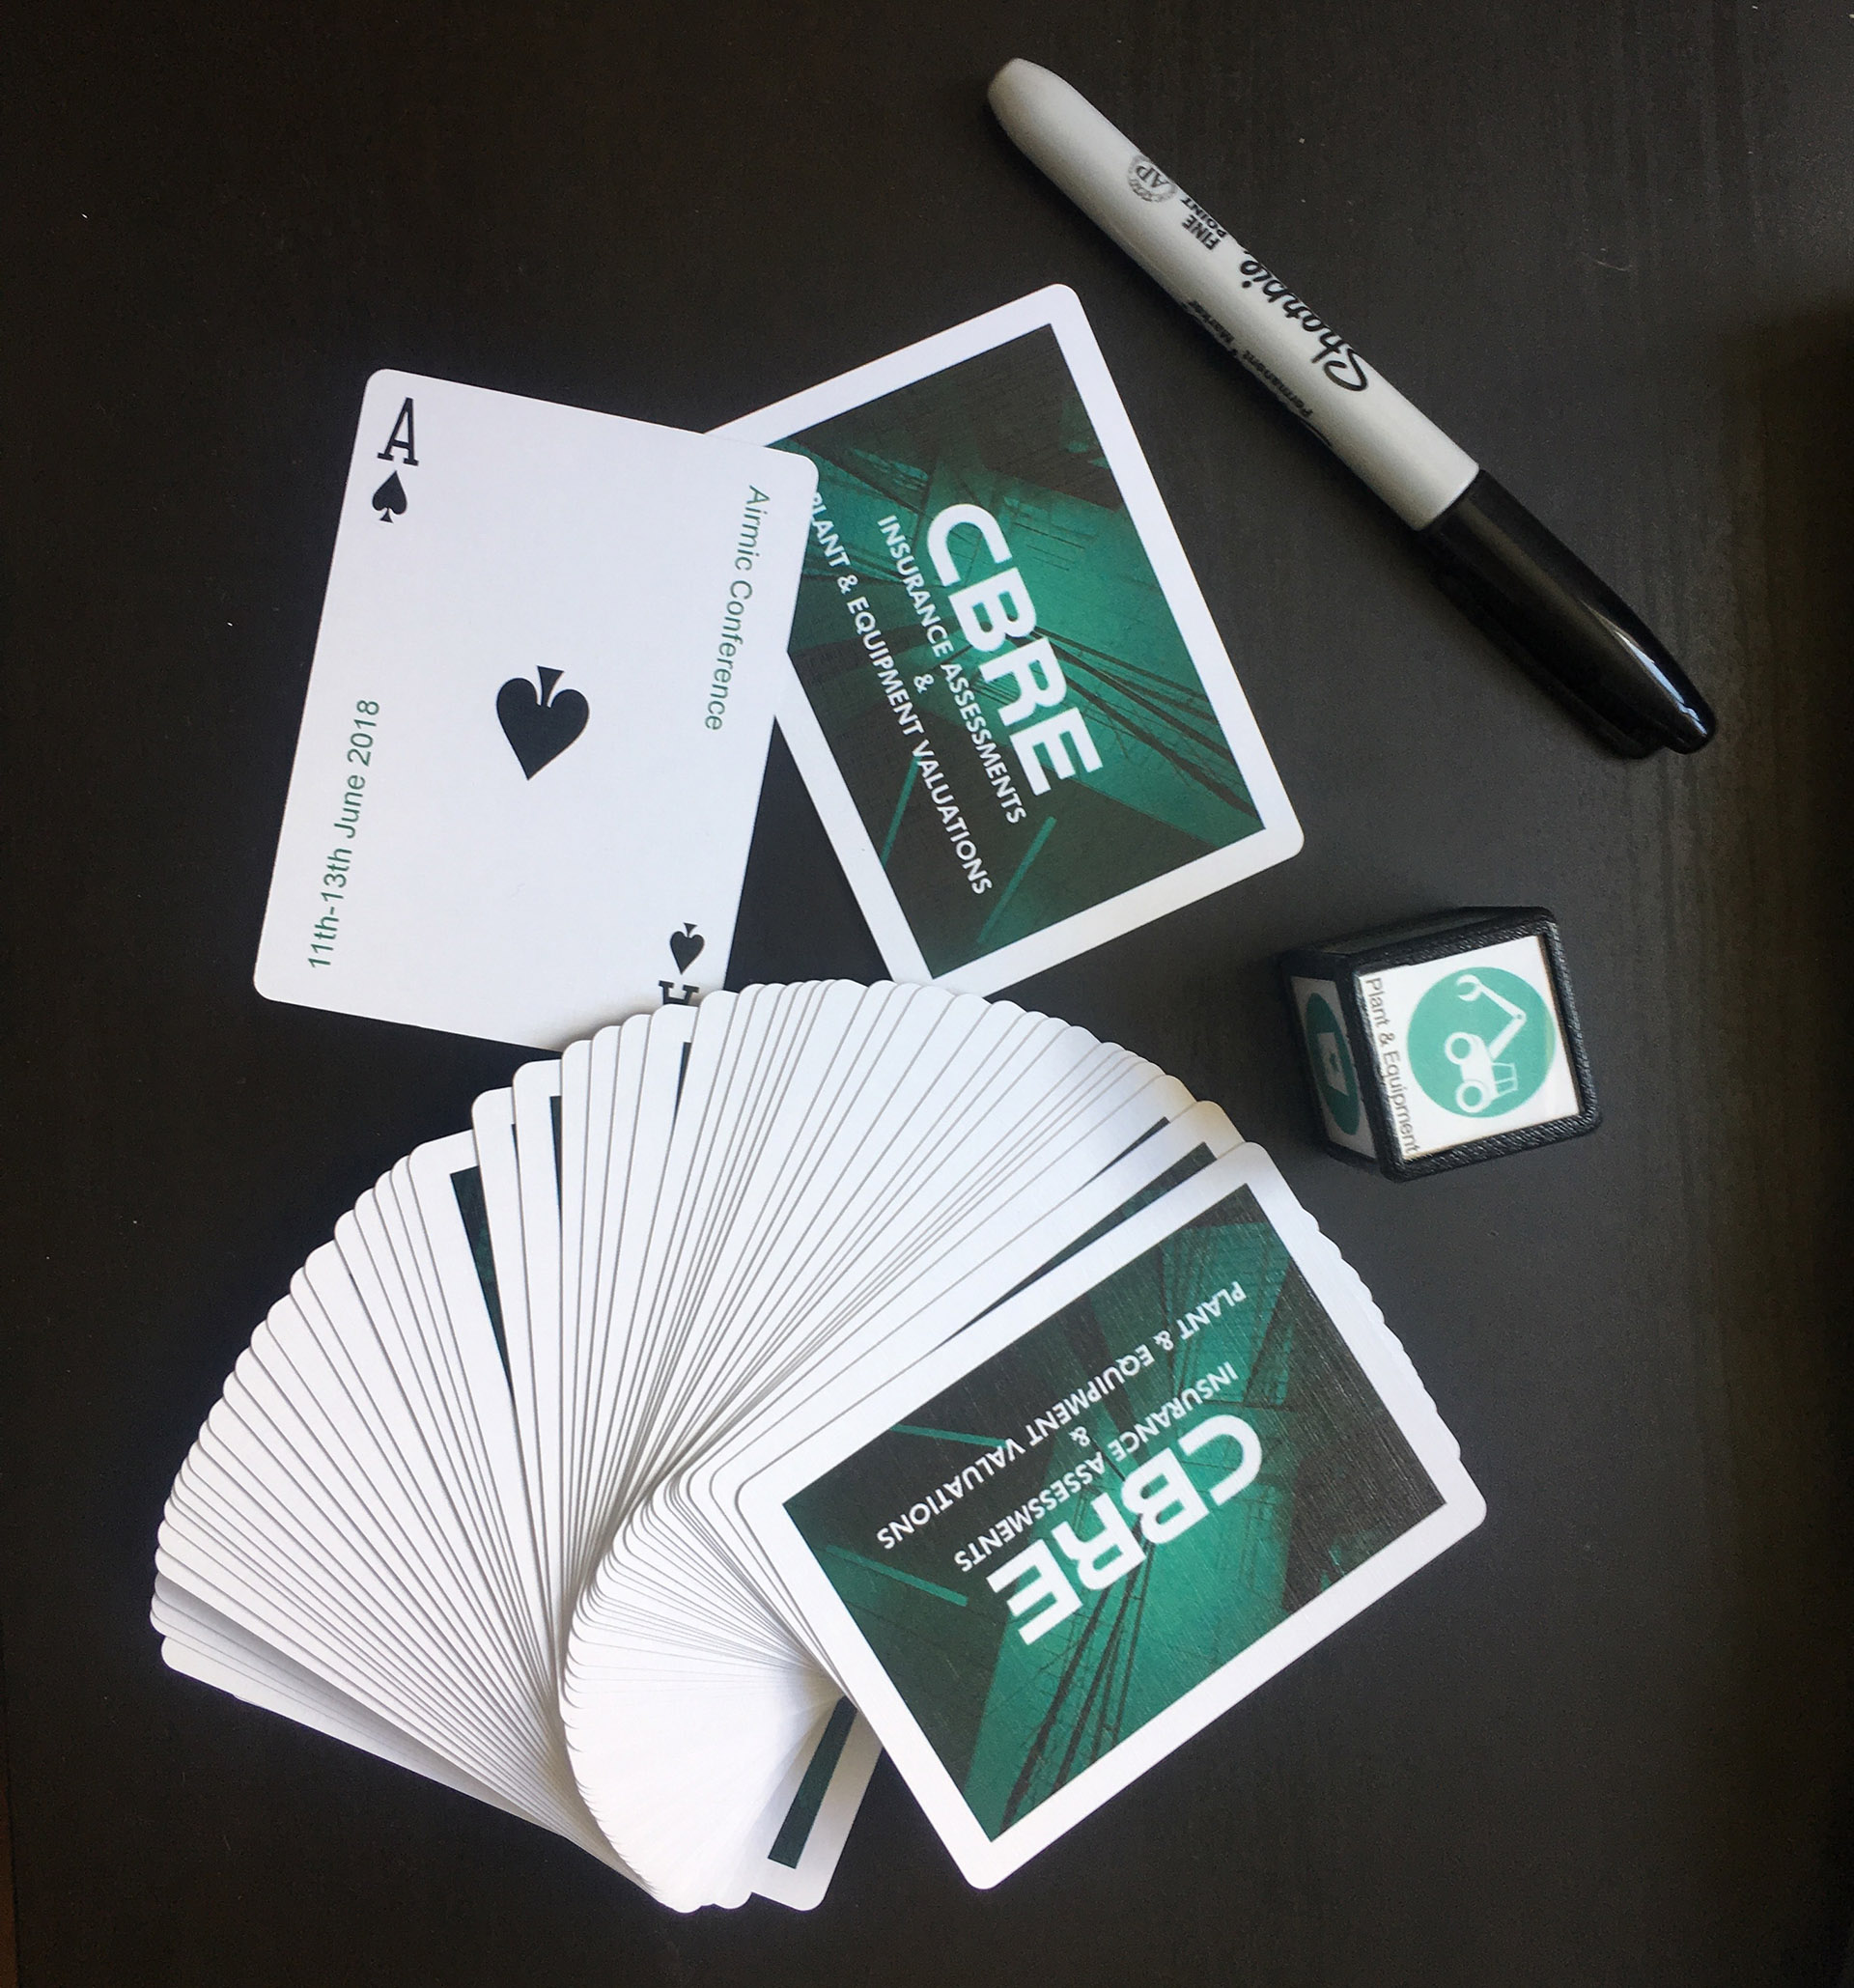 CBRE branded deck of cards